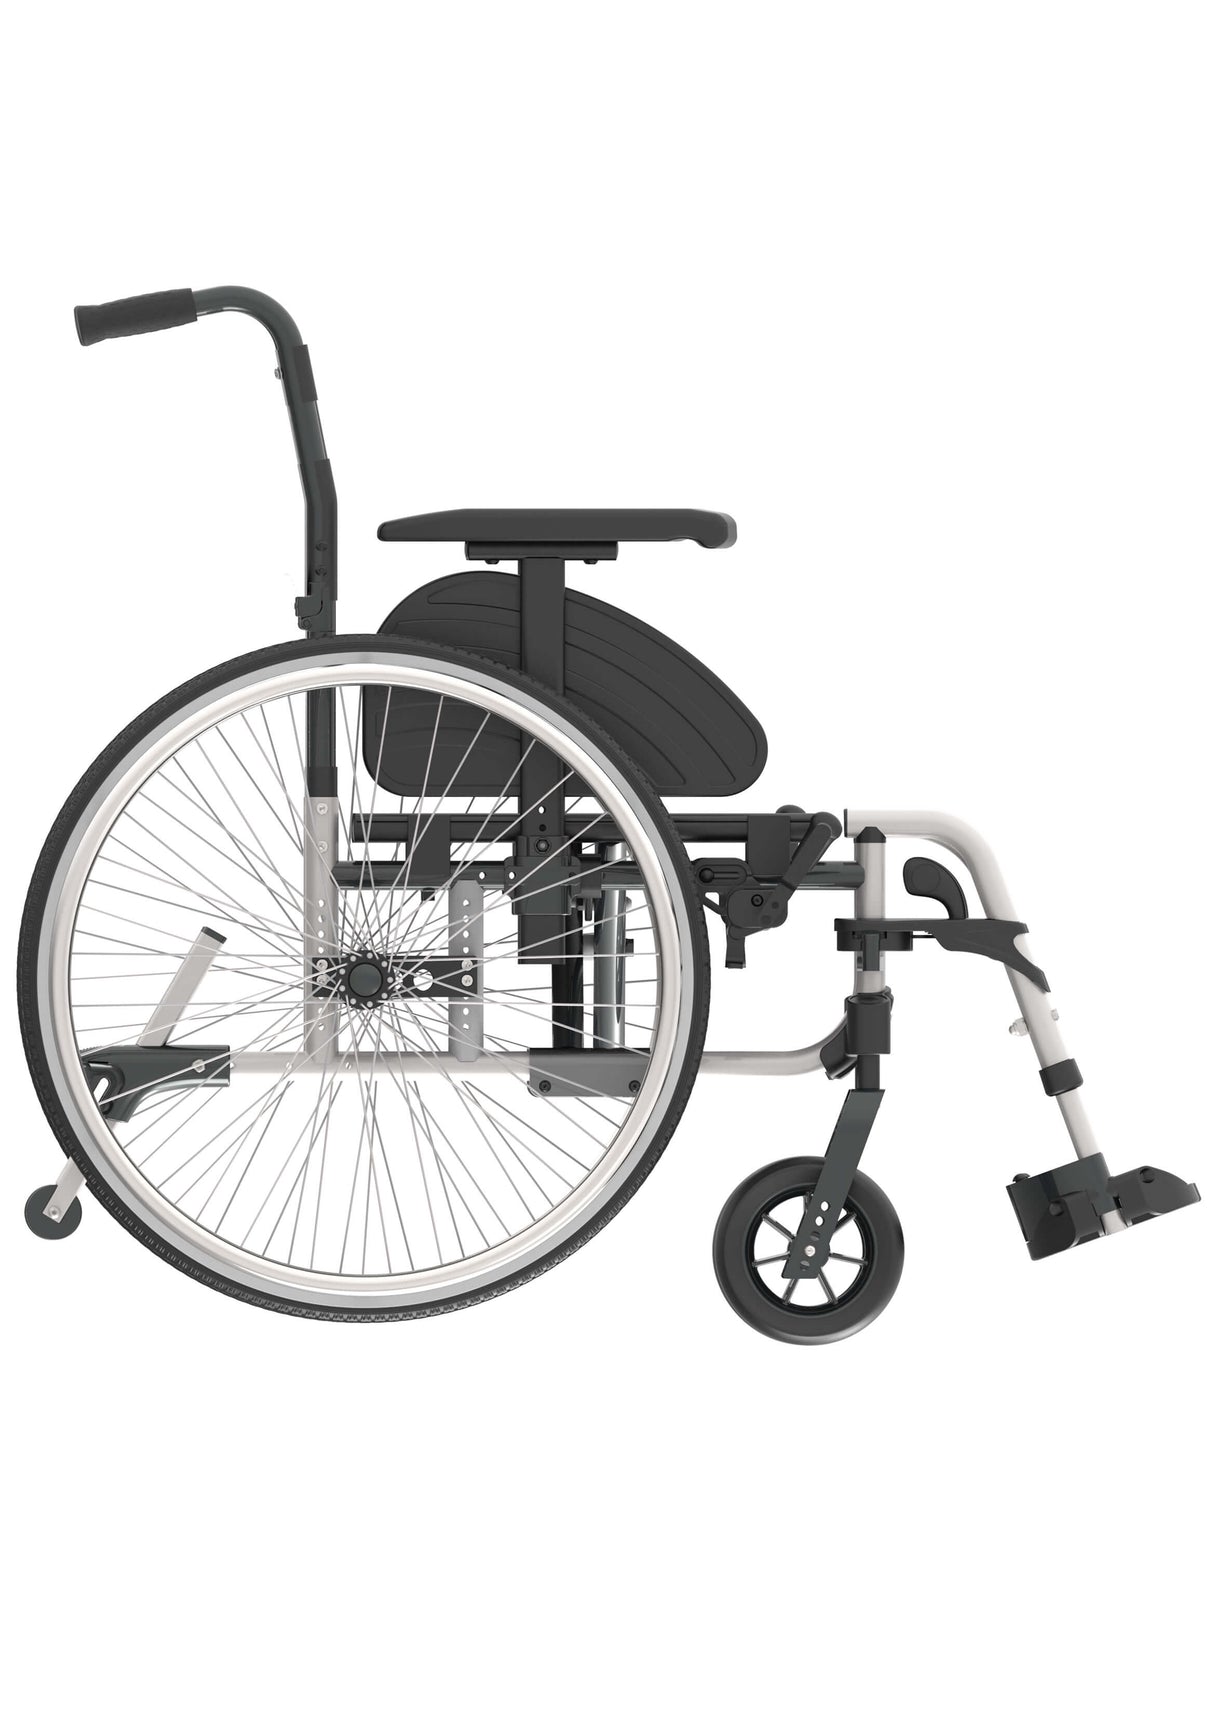 icon 30 sp wheelchair